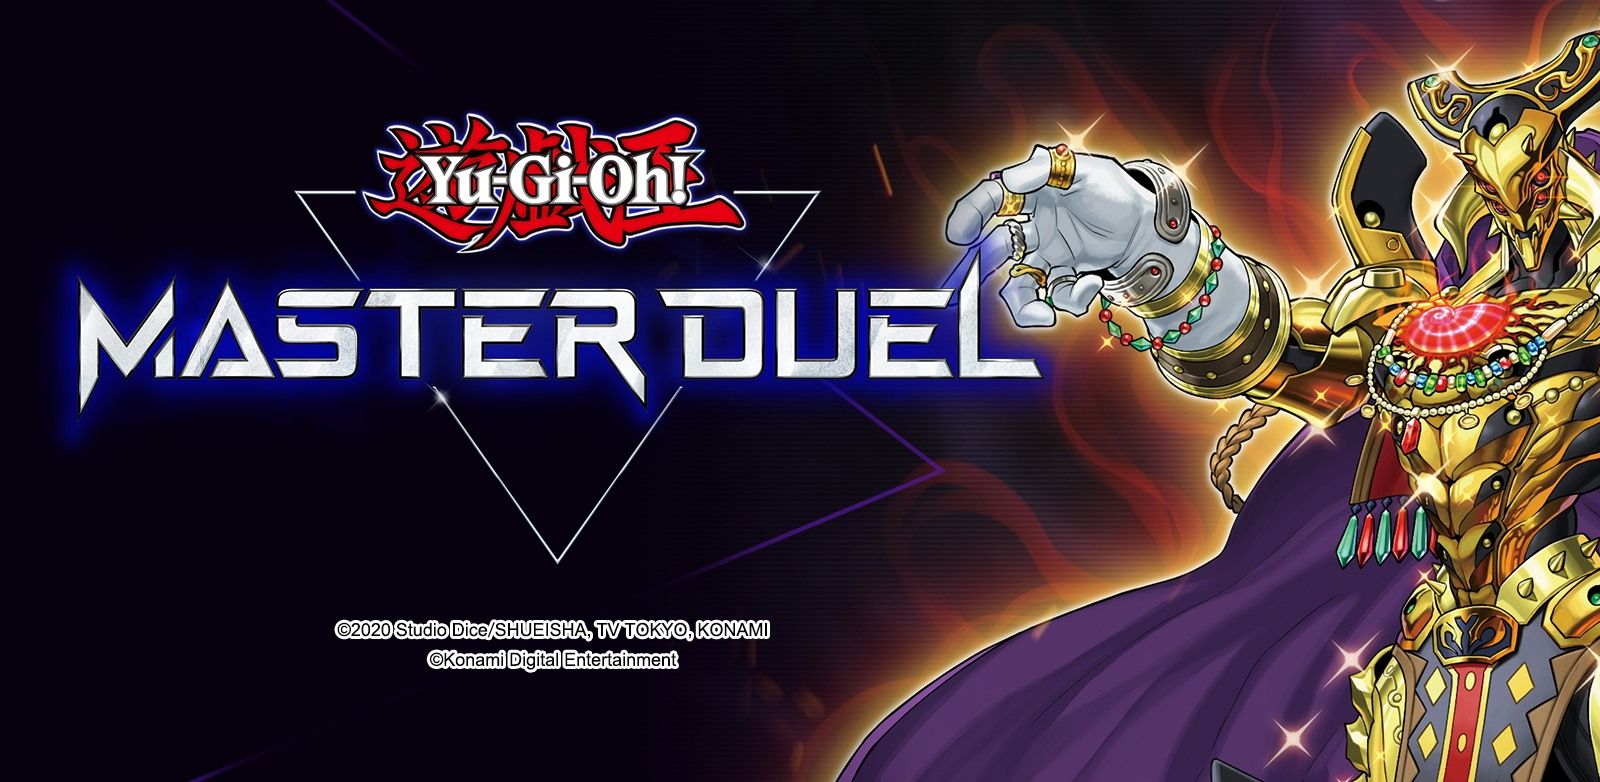 Master-duel-updated-hero-Konami